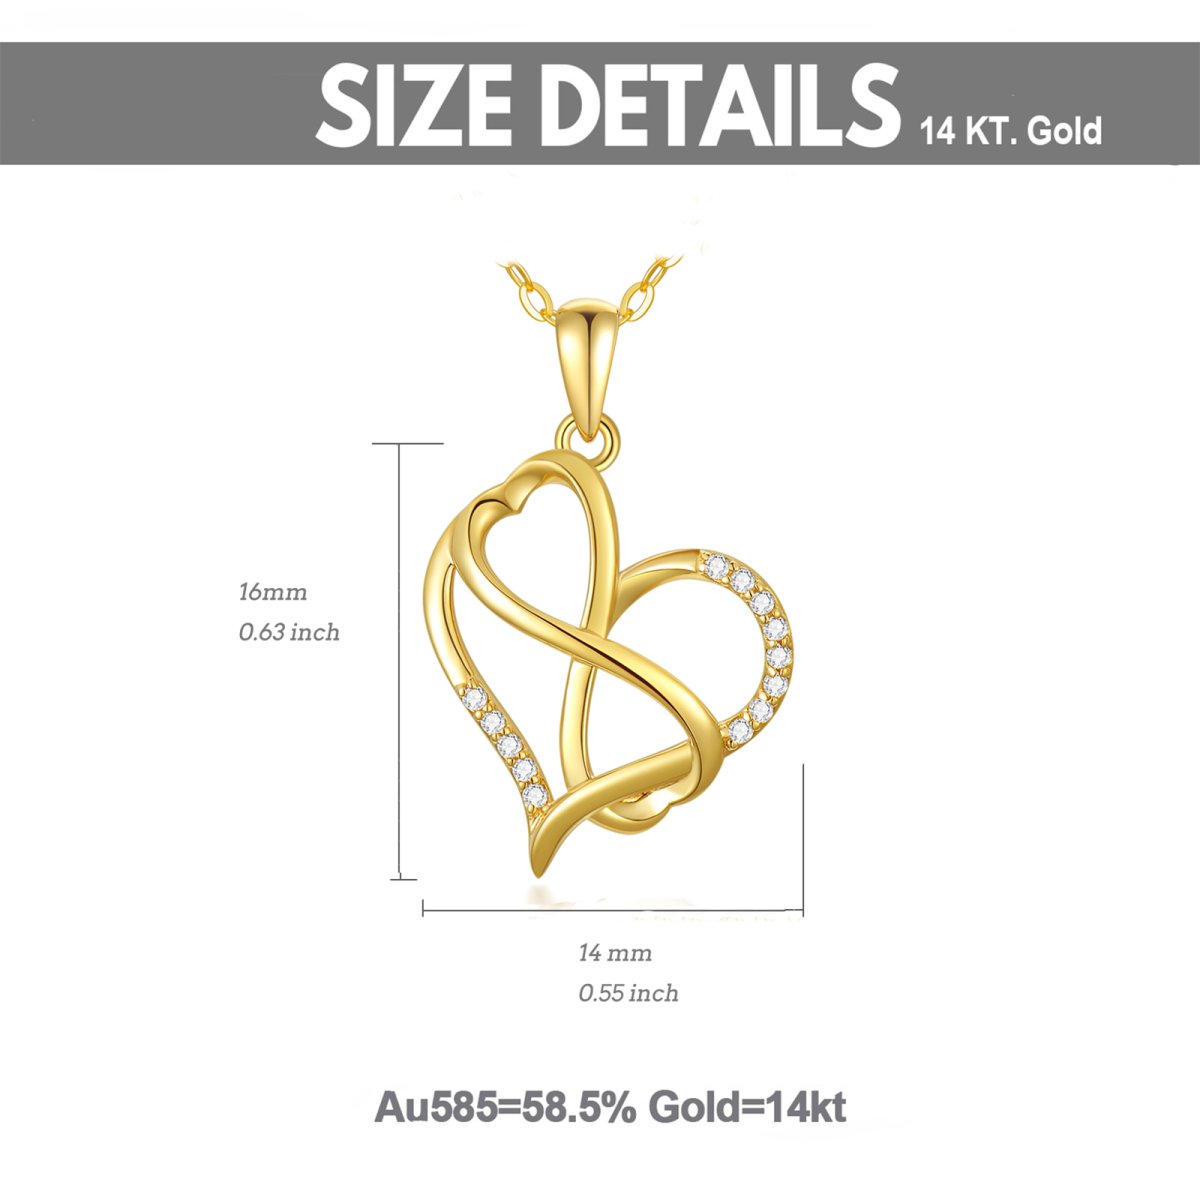 Collier en or 14K avec pendentif circulaire en zircon cubique en forme de coeur et symbole-6